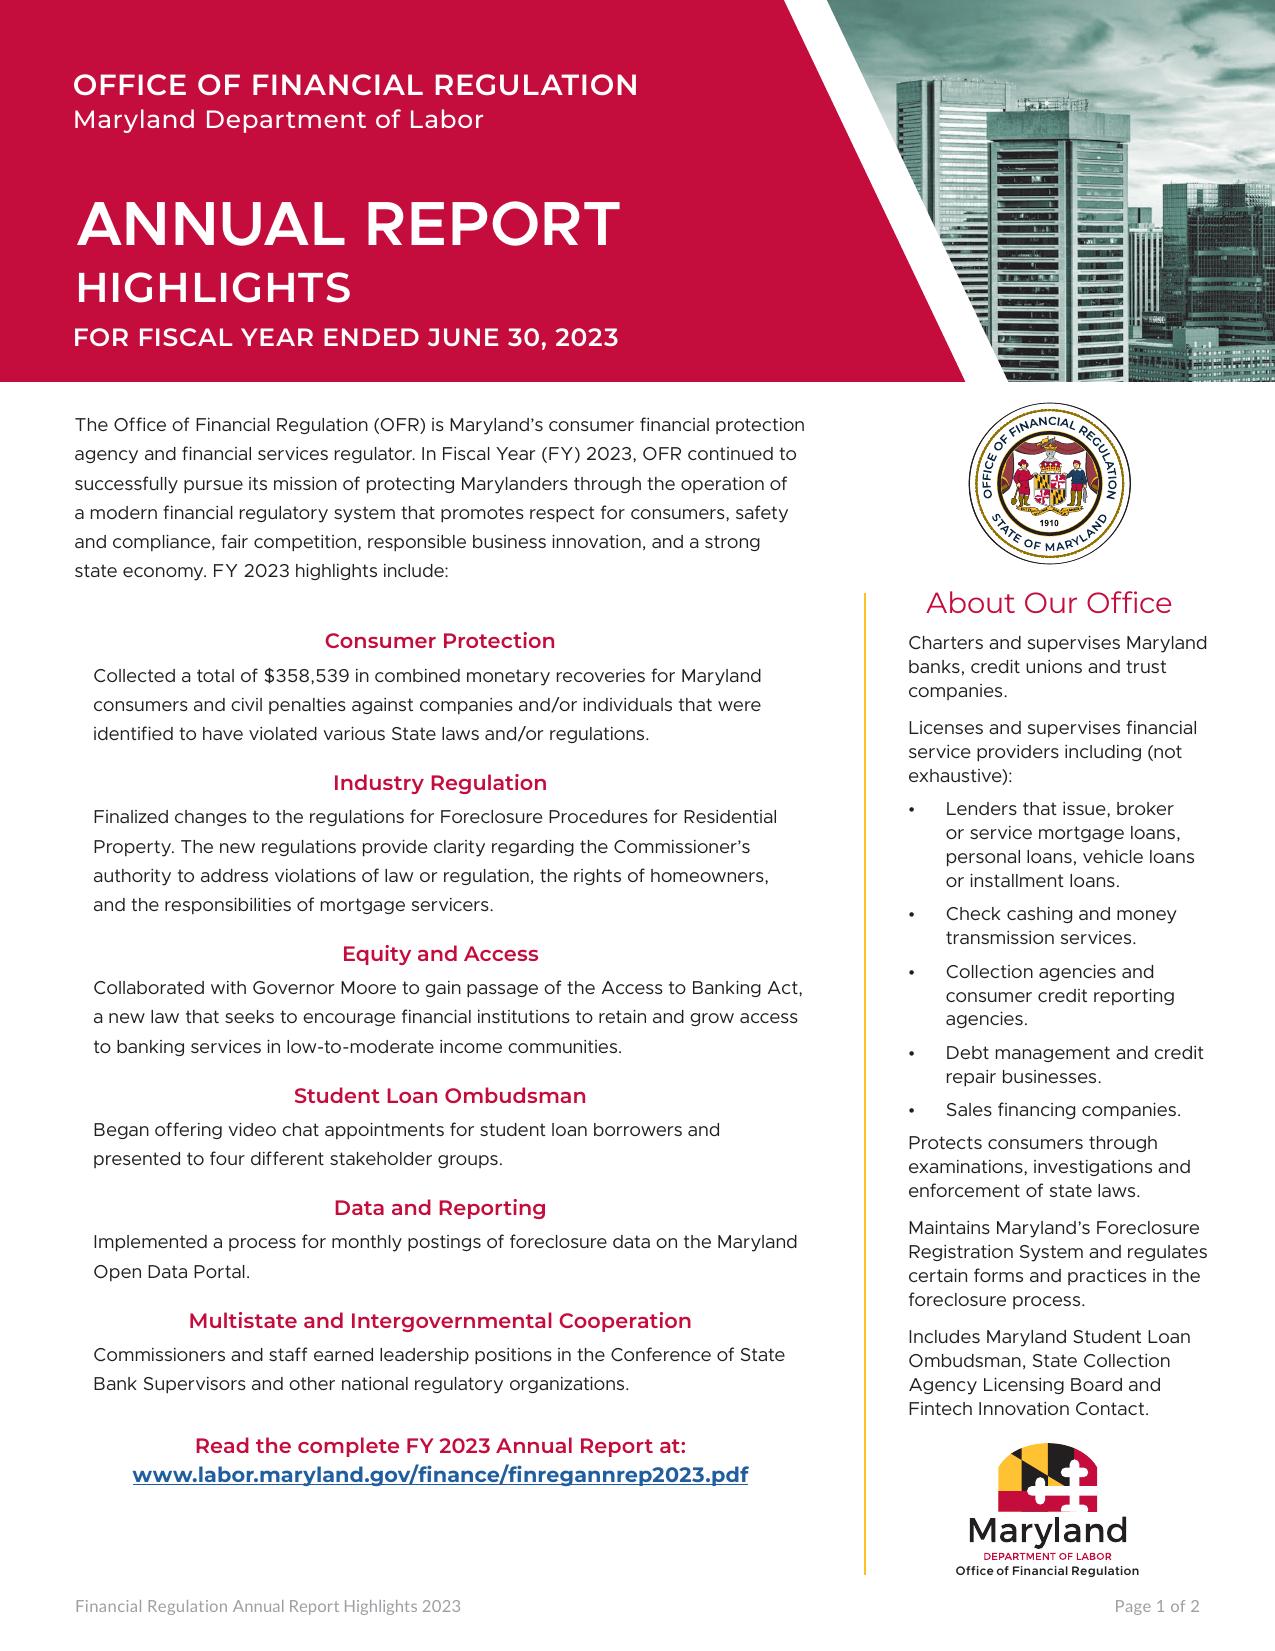 DLLR.STATE.MD 2023 Annual Report